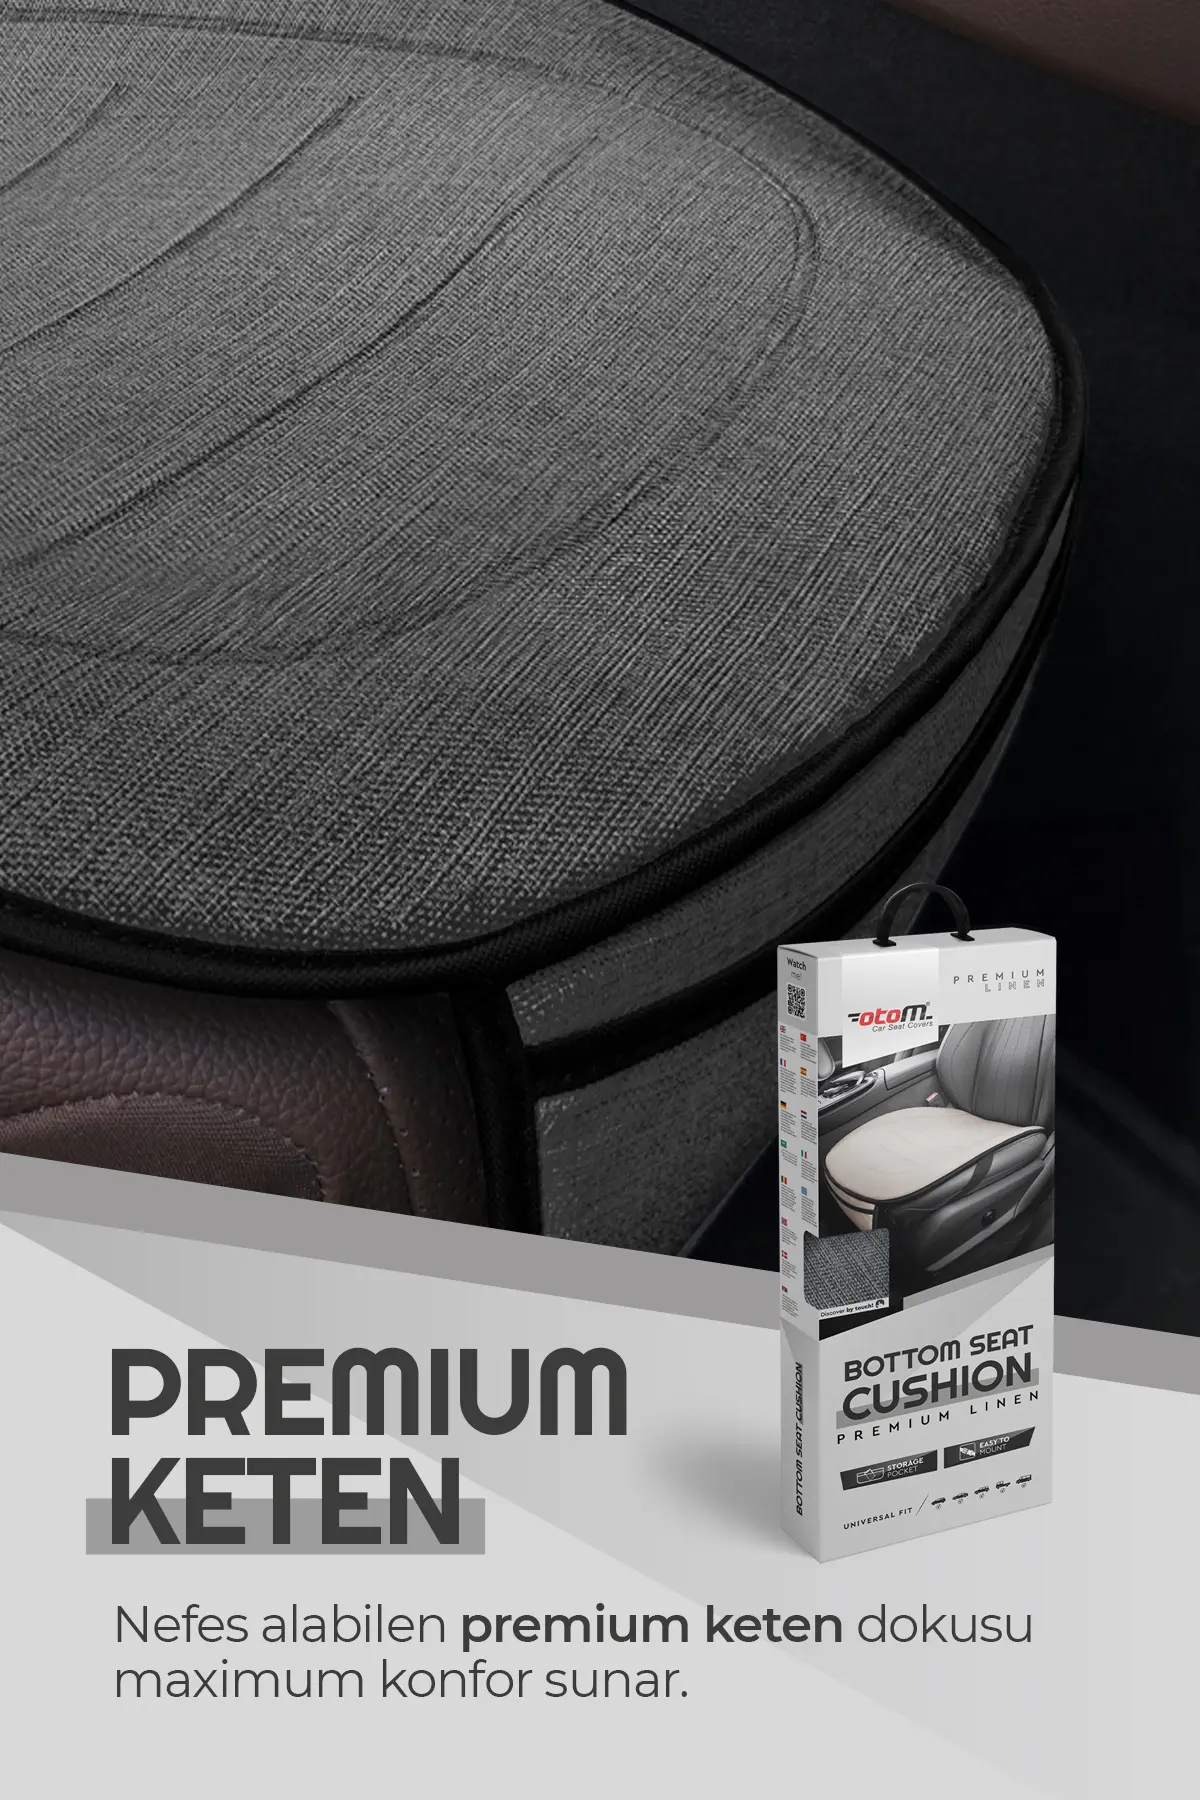 Otom Premium Ön Koltuk Minderi Yüksek Kalite Keten - 6